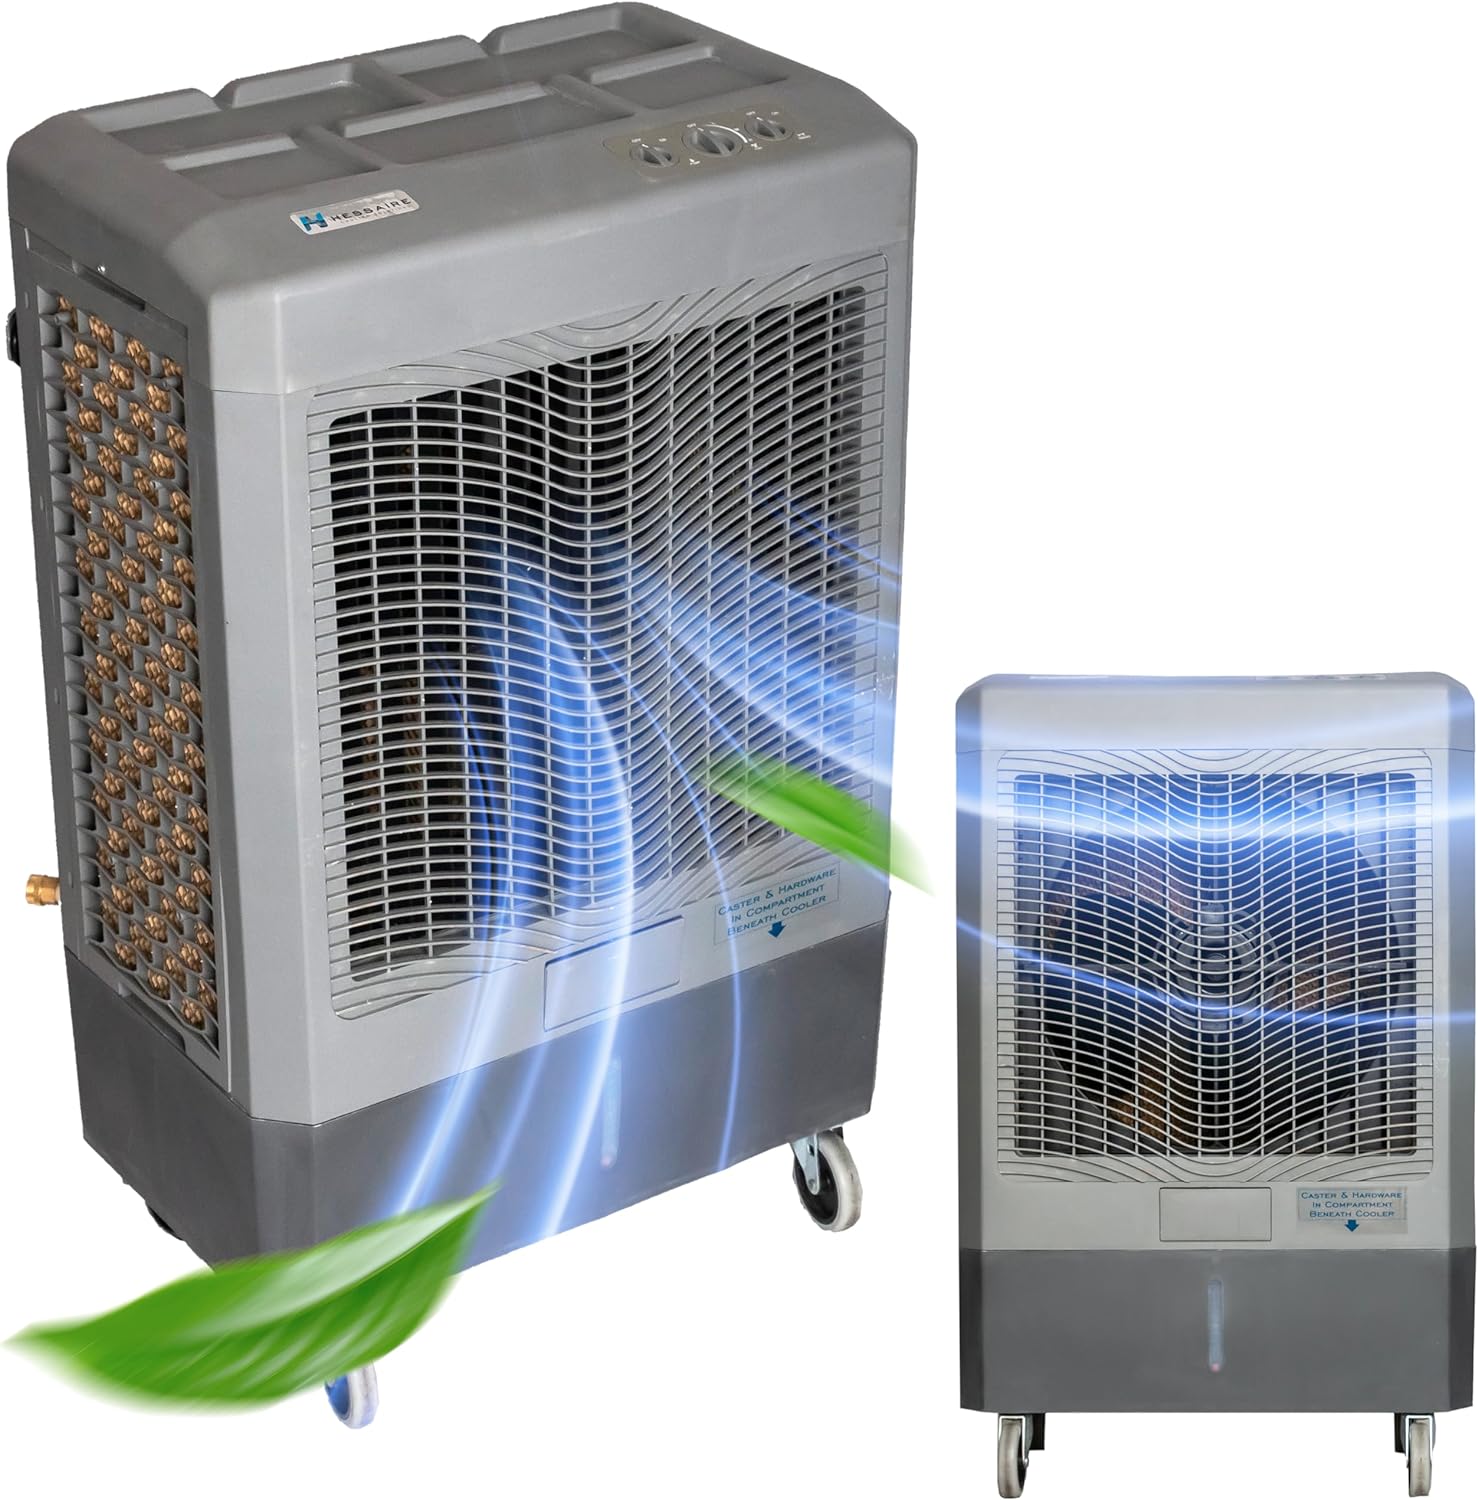 Portable Swamp Coolers - 5300 CFM MC61M Evaporative Air Cooler - $346